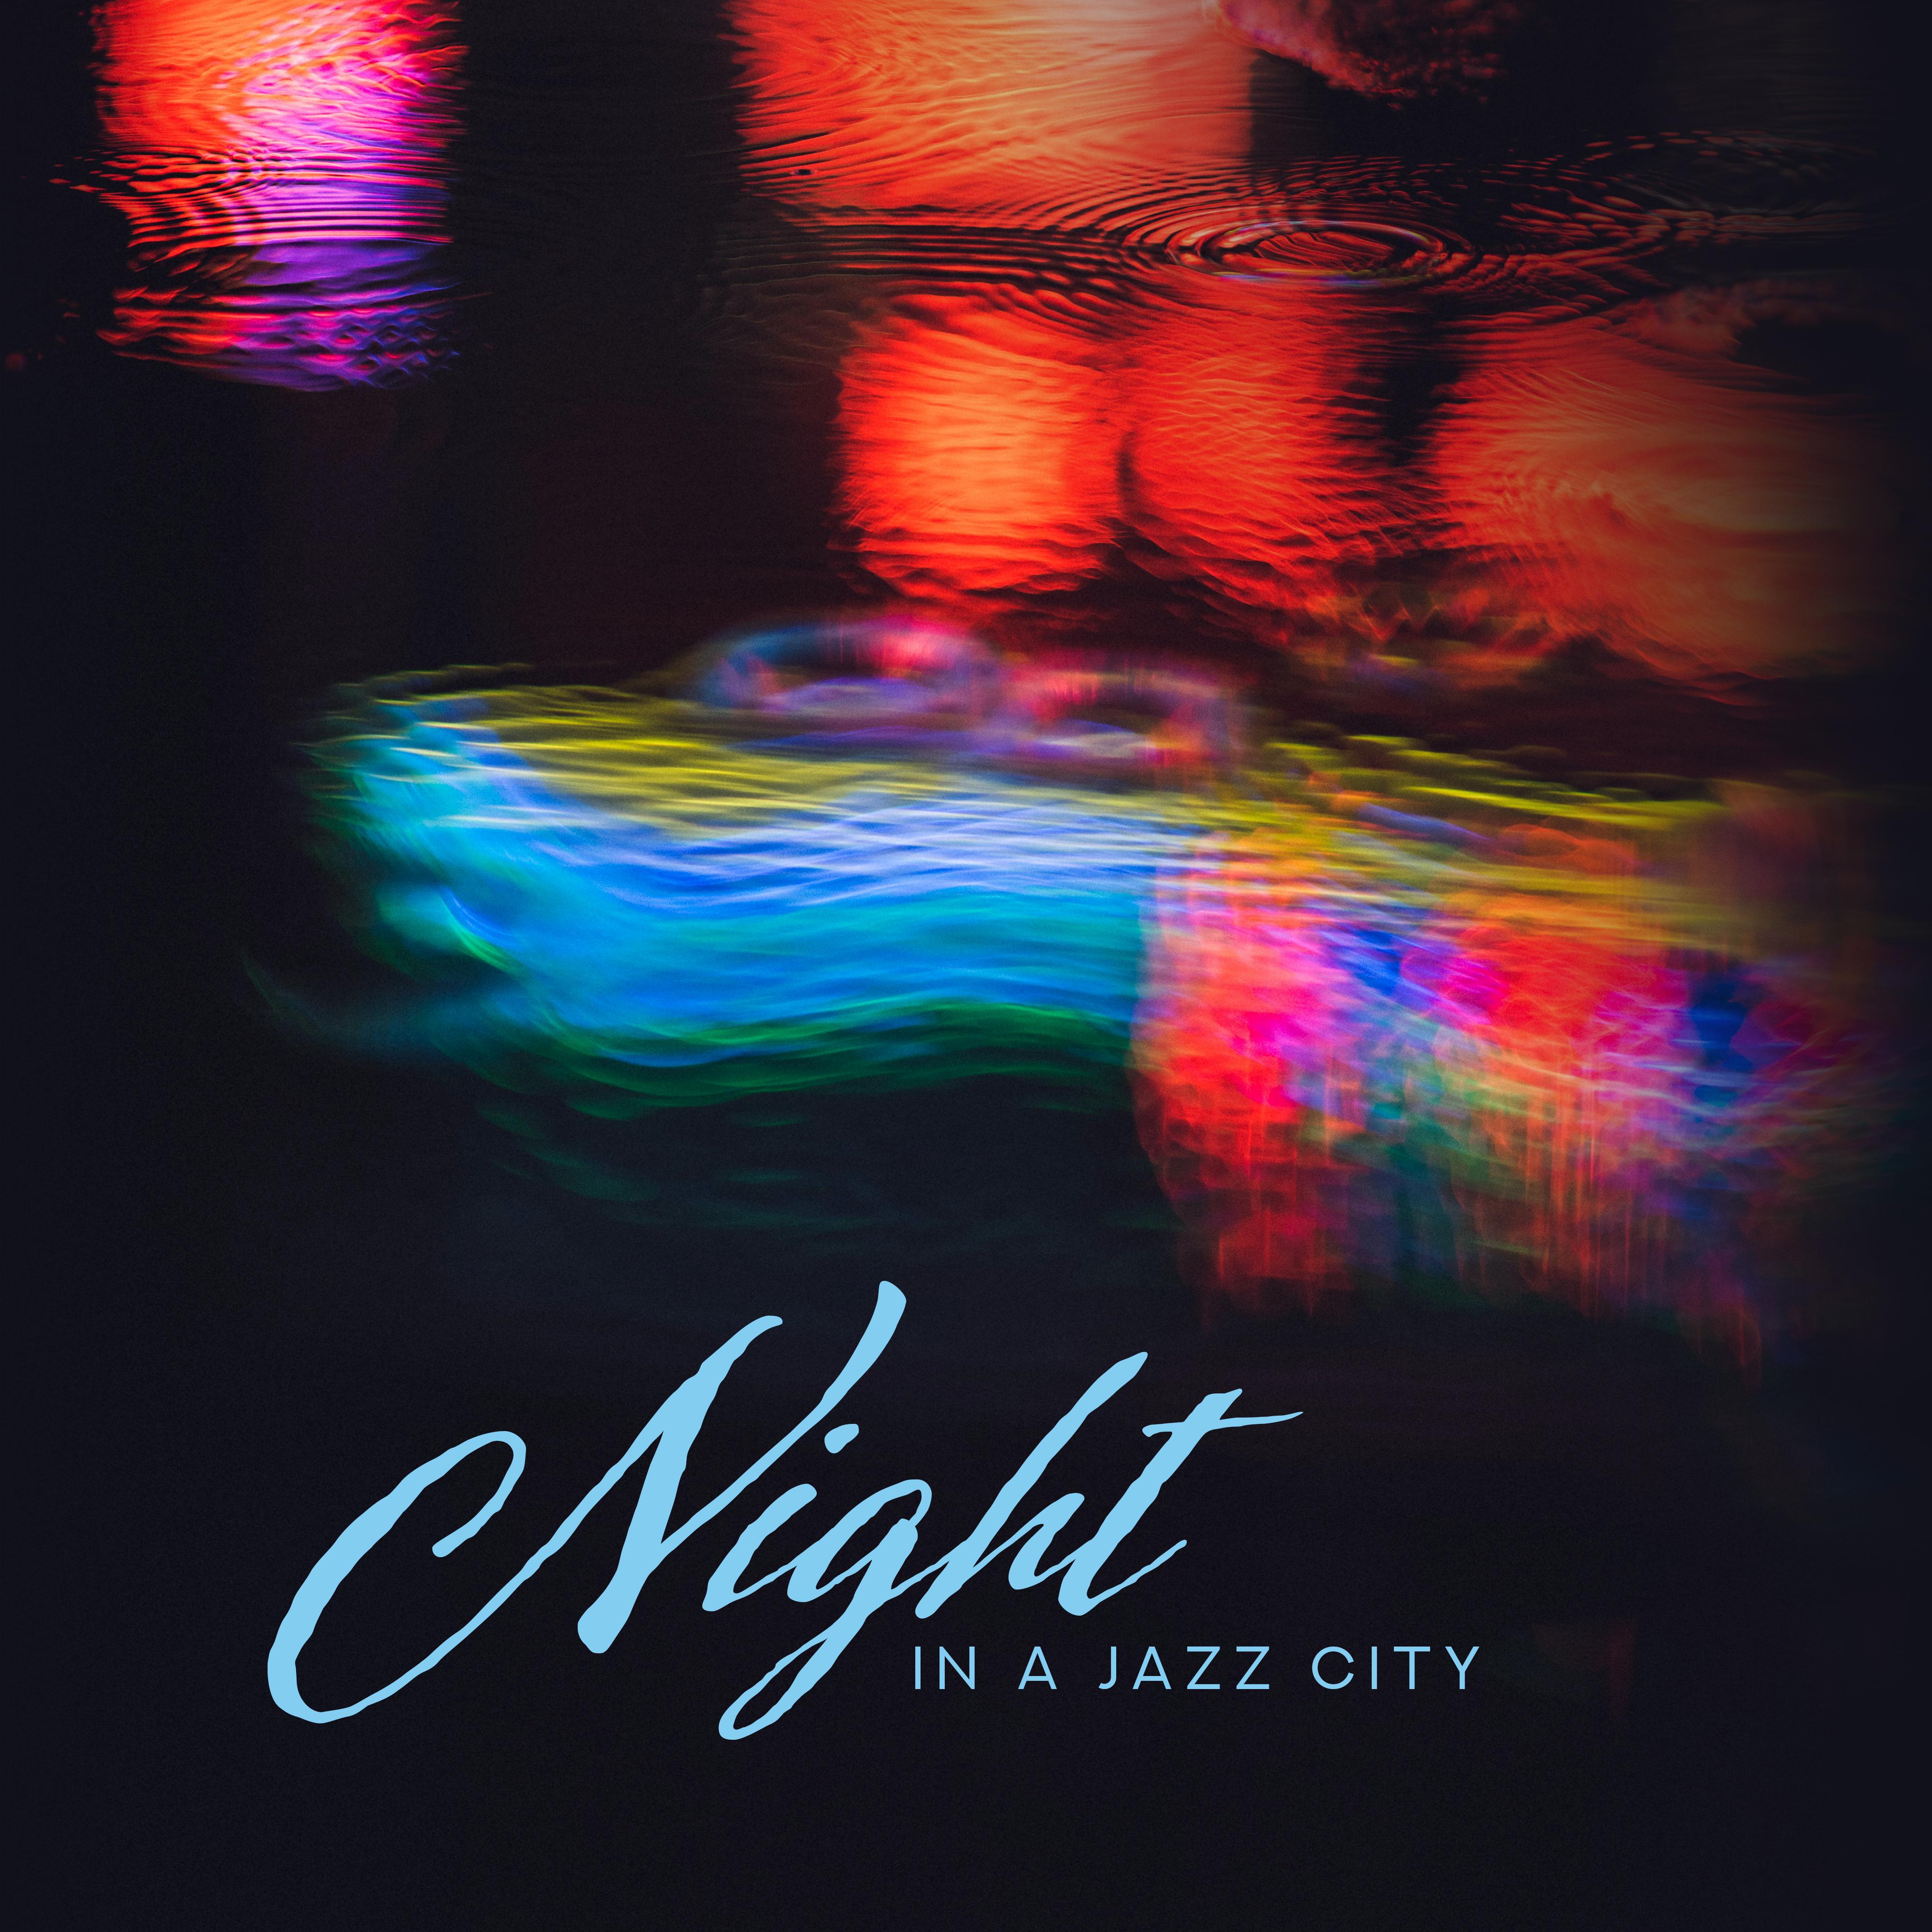 Night in a Jazz City: Instumental Smooth Jazz Music 2019 Compilation for Elegant Jazz Club, Restaurant or Cafe